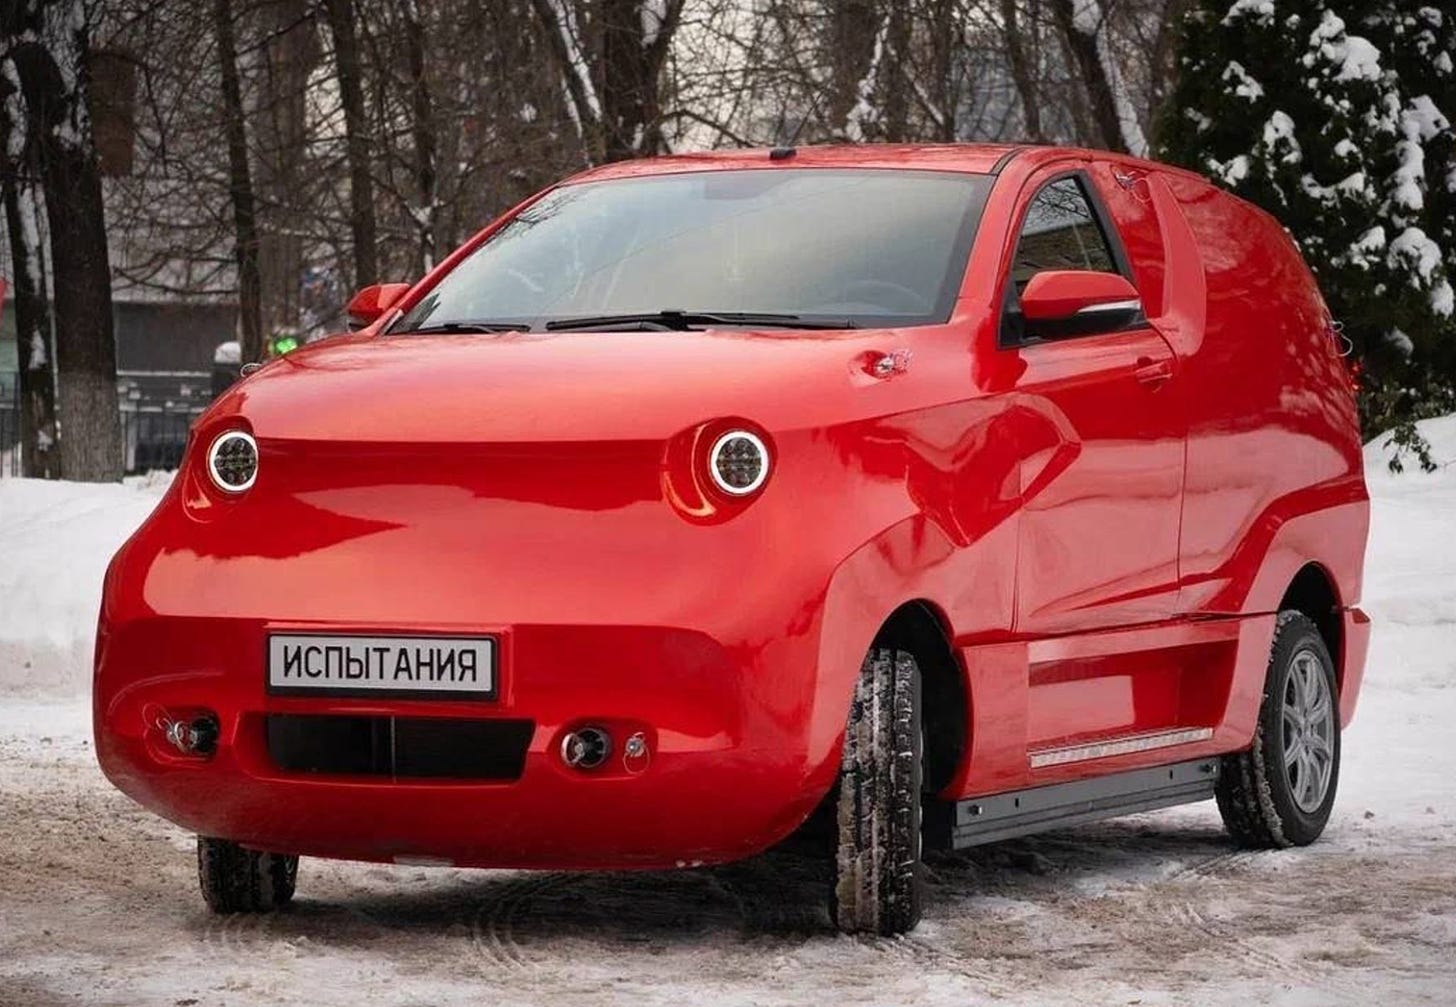 A strange, squat red car with headlights that look like terrified eyeballs